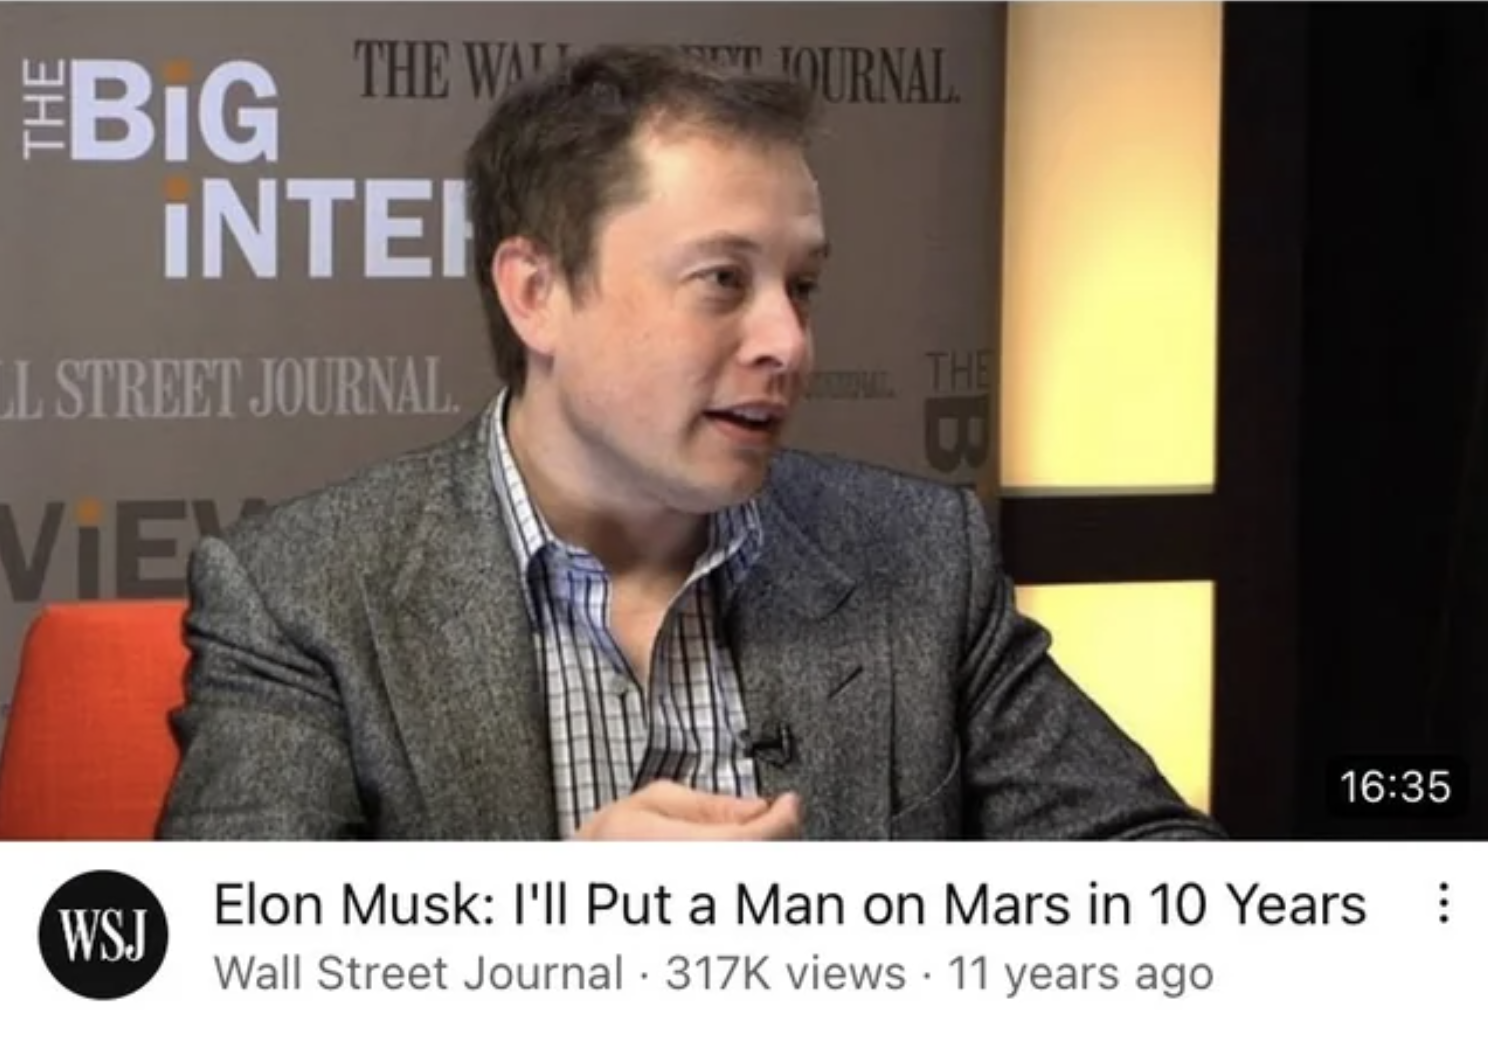 Cringey Fails - elon musk mars 10 years - The Wall Big Intei L Street Journal. Vien Wsj Journal The B Elon Musk I'll Put a Man on Mars in 10 Years Wall Street Journal views 11 years ago